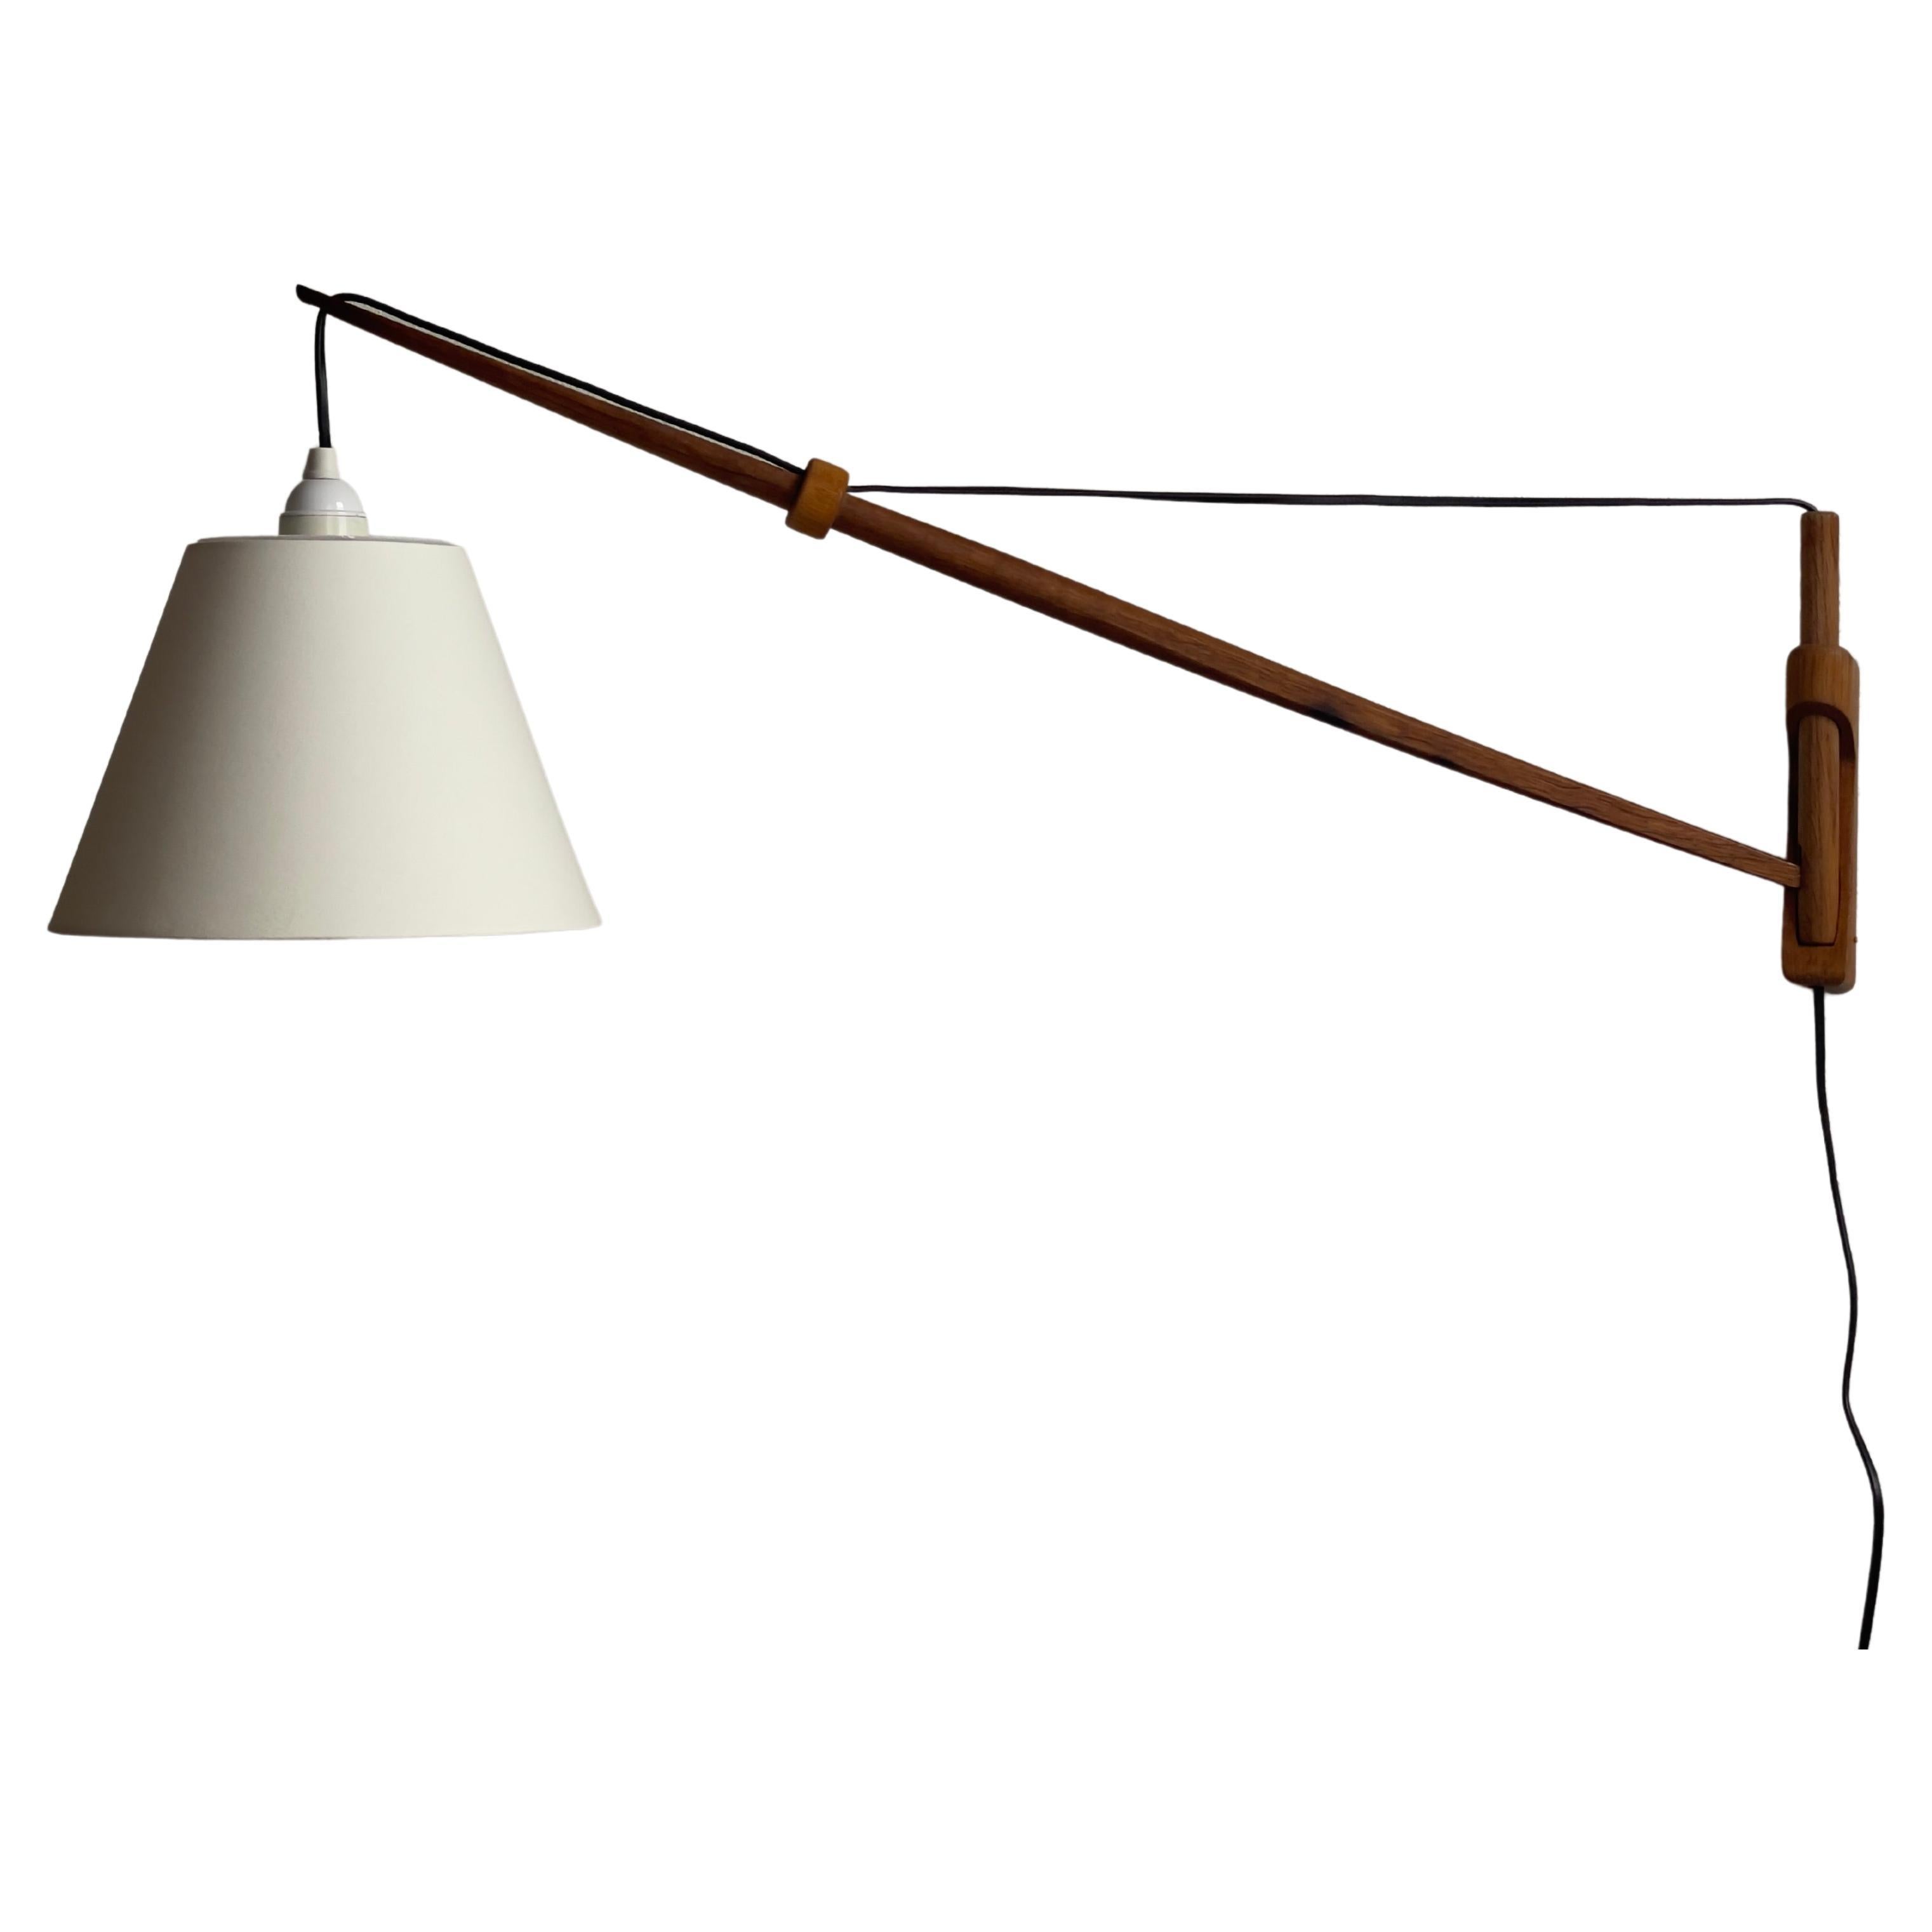 Denmark 1960s danish modern wall lamp/pendant in solid oak with new linen shade.